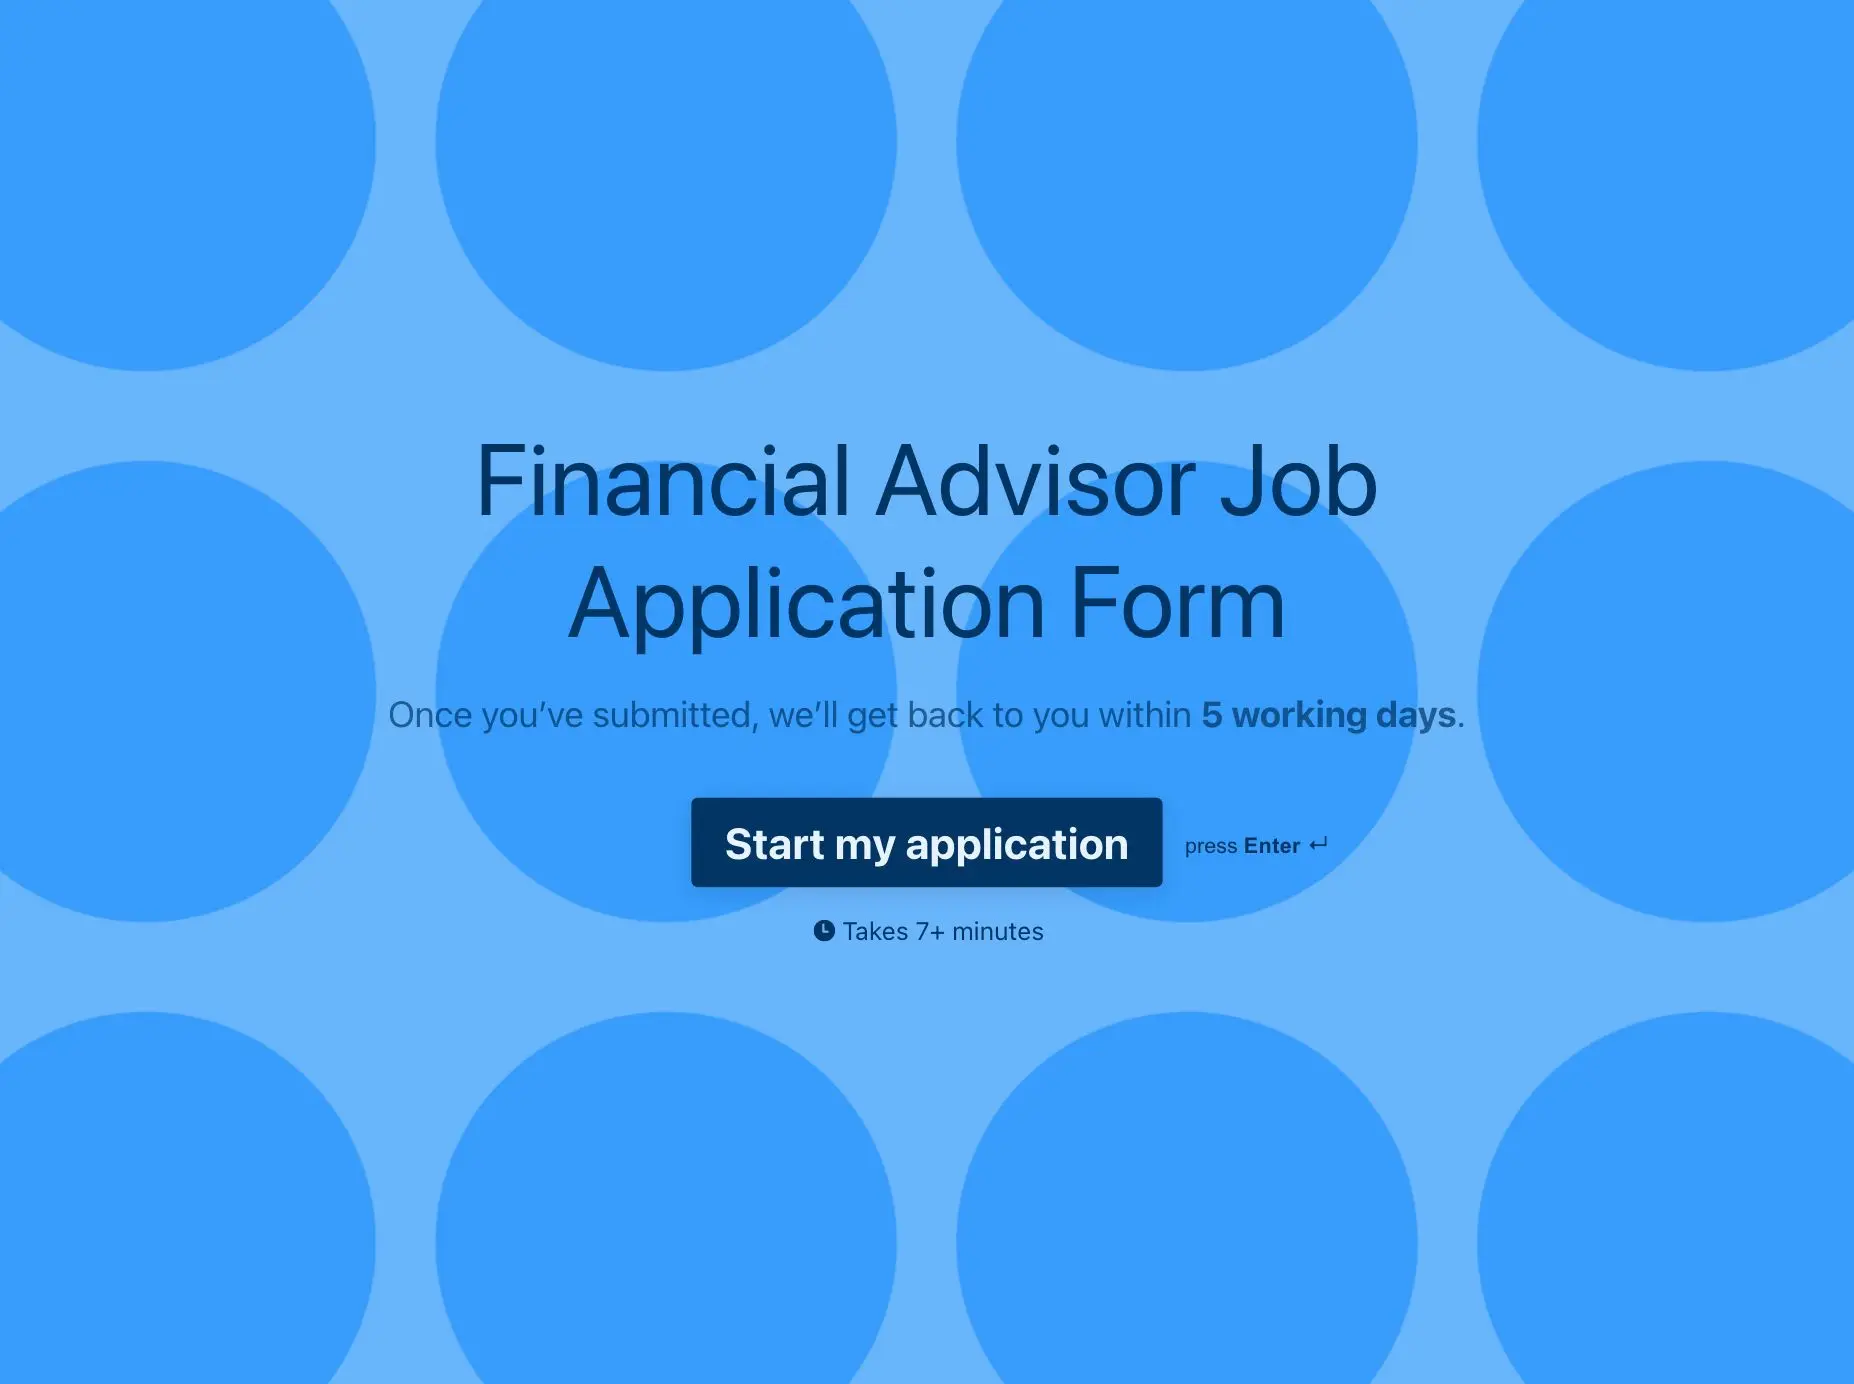 Financial Advisor Job Application Form Template Hero